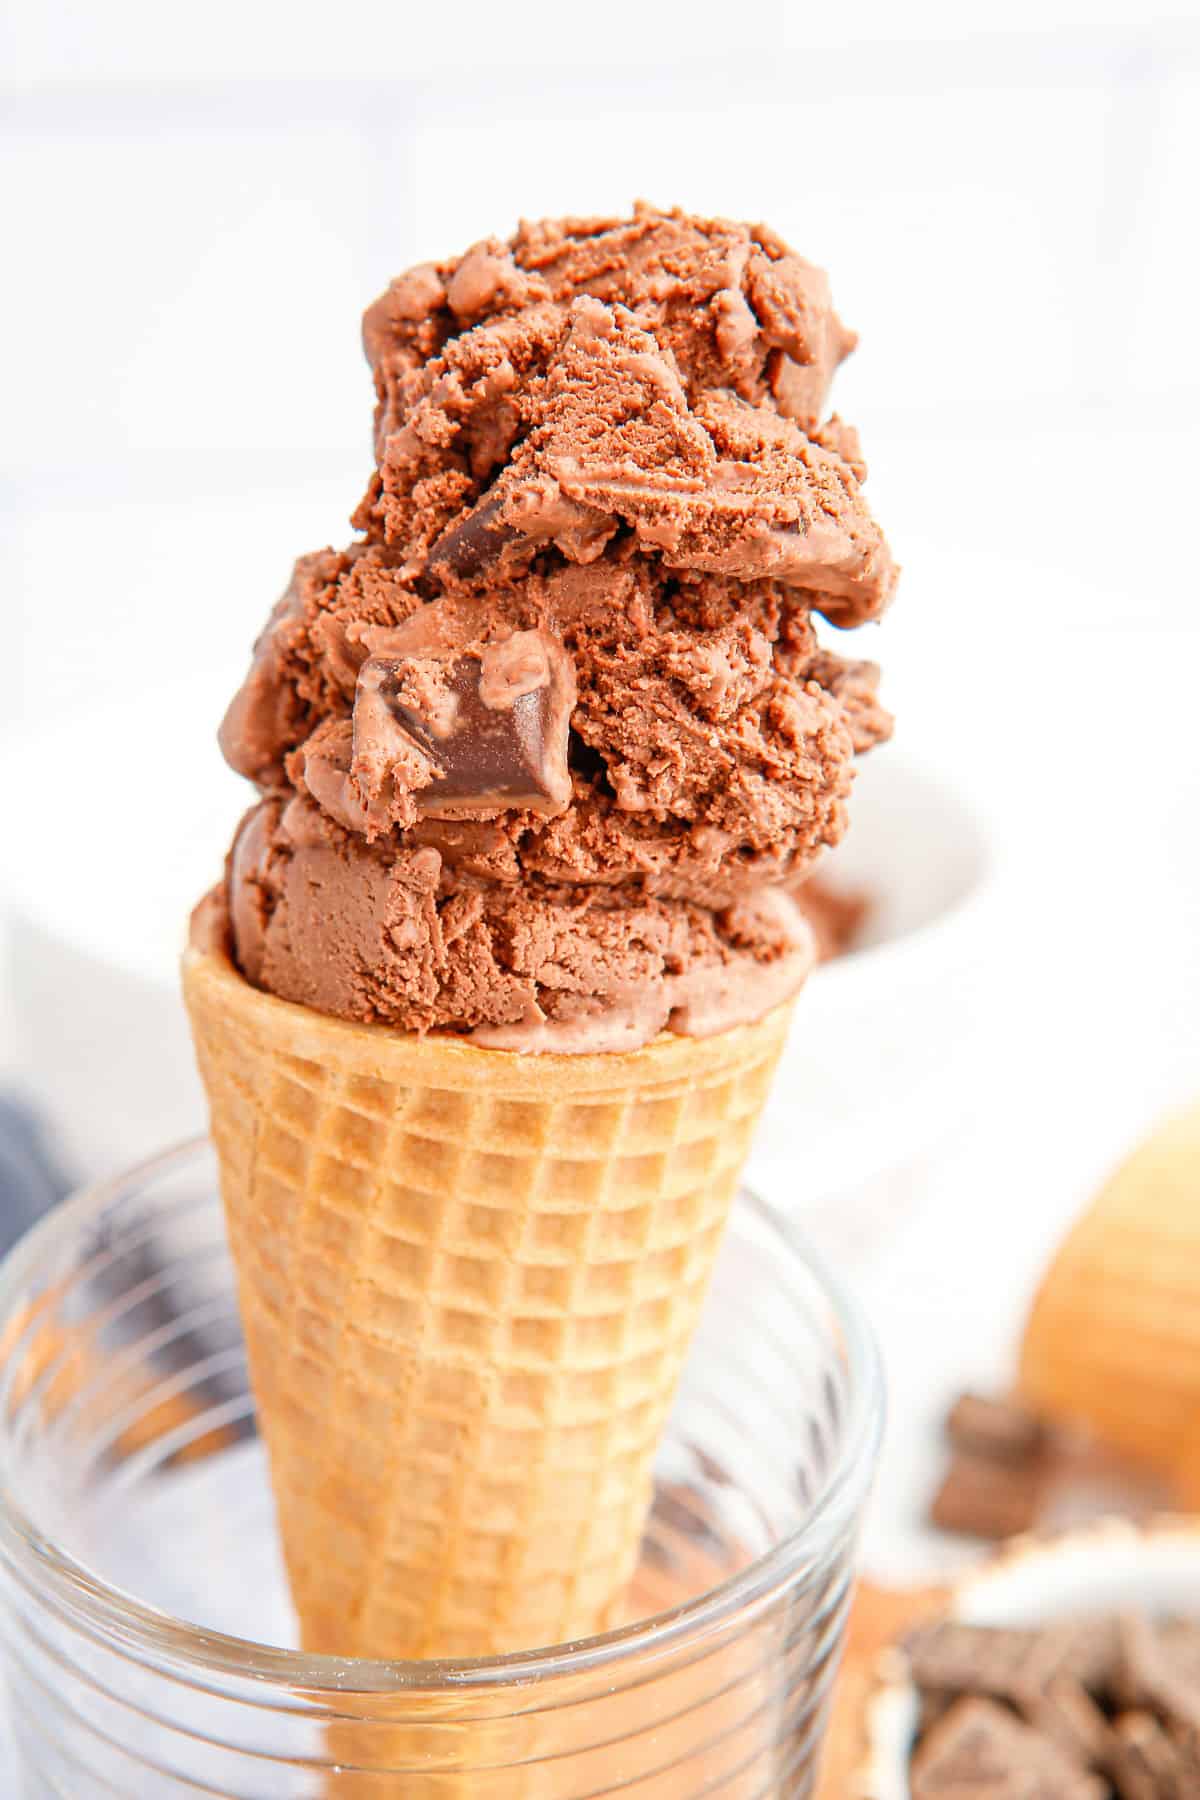 Chocolate chunk ice cream on a sugar cone.